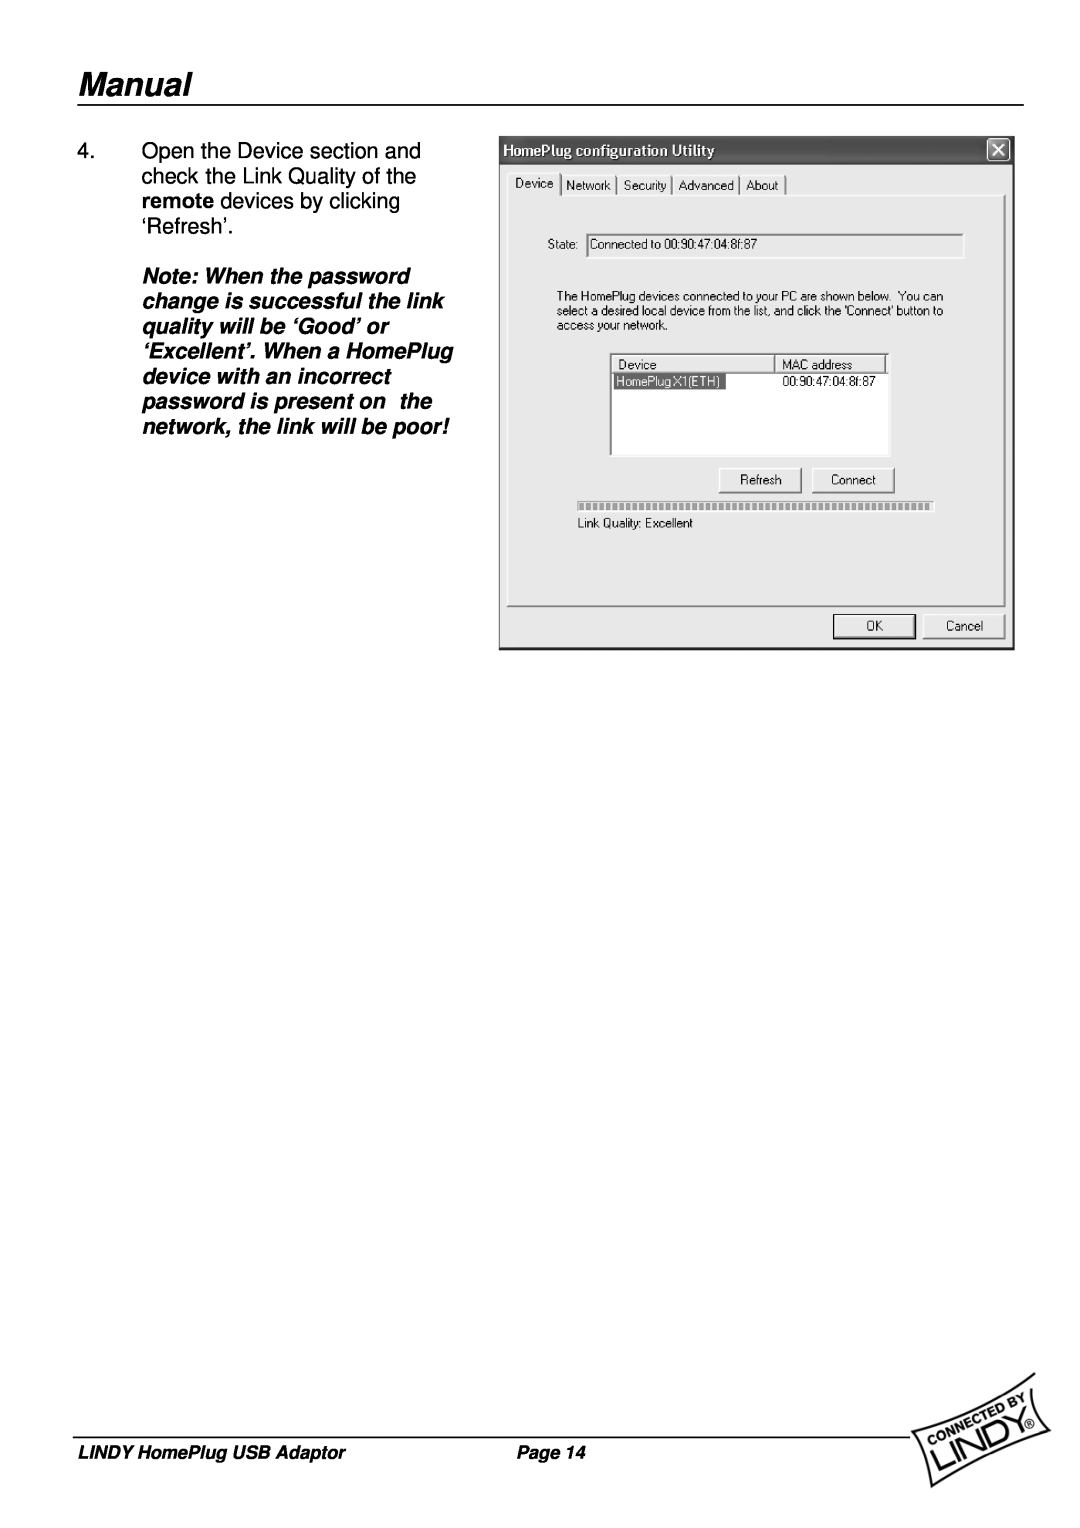 Lindy 25121 user manual Manual, LINDY HomePlug USB Adaptor, Page 